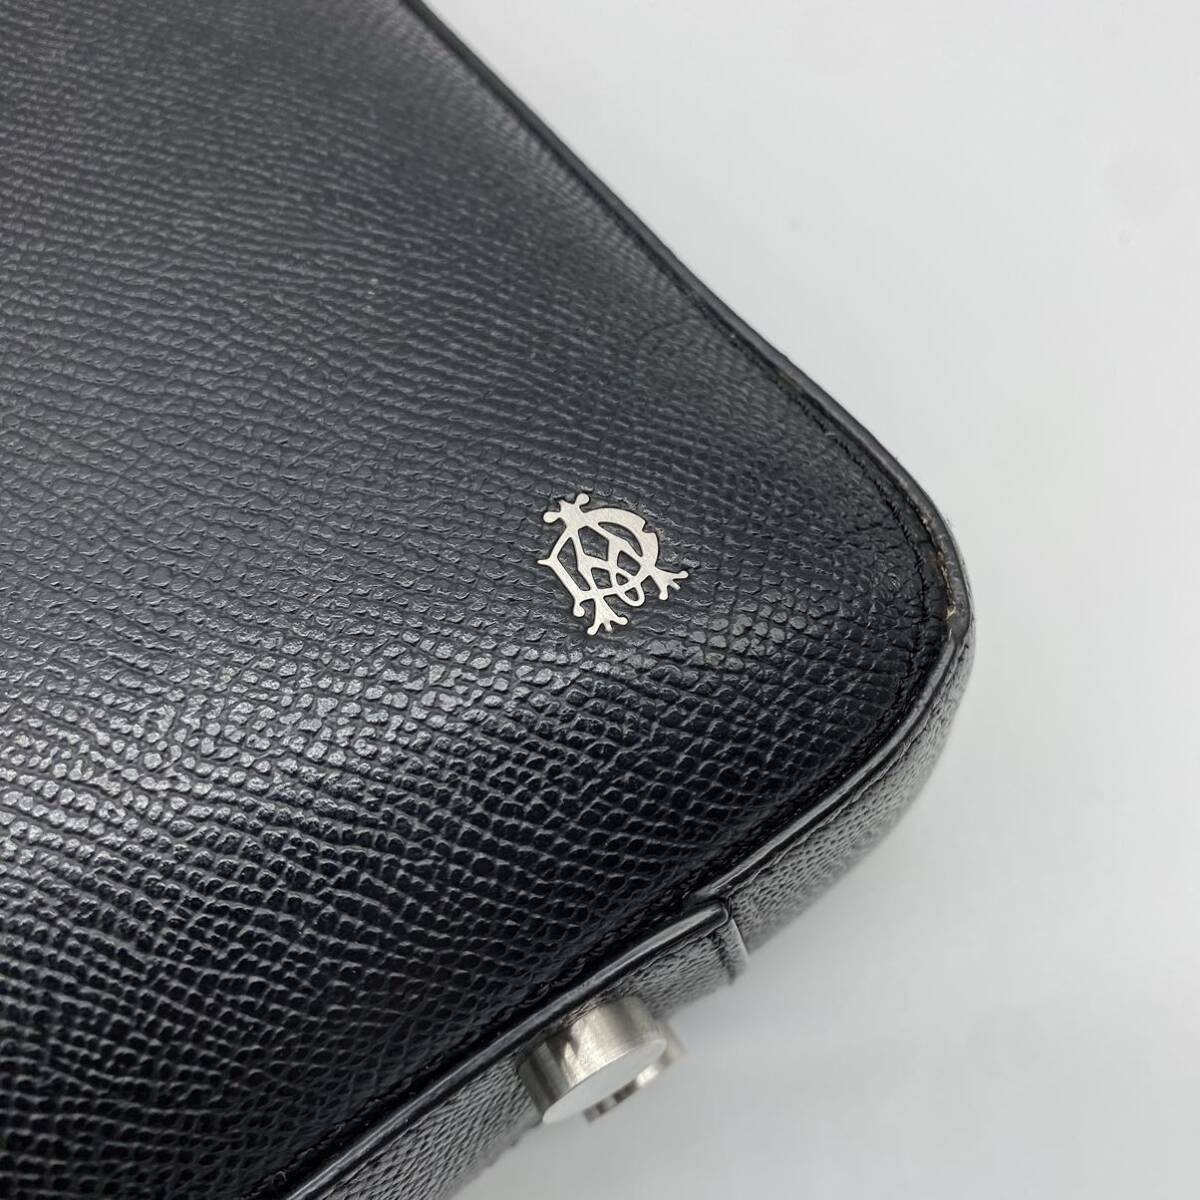 1 jpy [ beautiful goods * highest peak ] dunhill Dunhill handbag business bag briefcase board nkado gun Logo metal fittings black leather original leather 